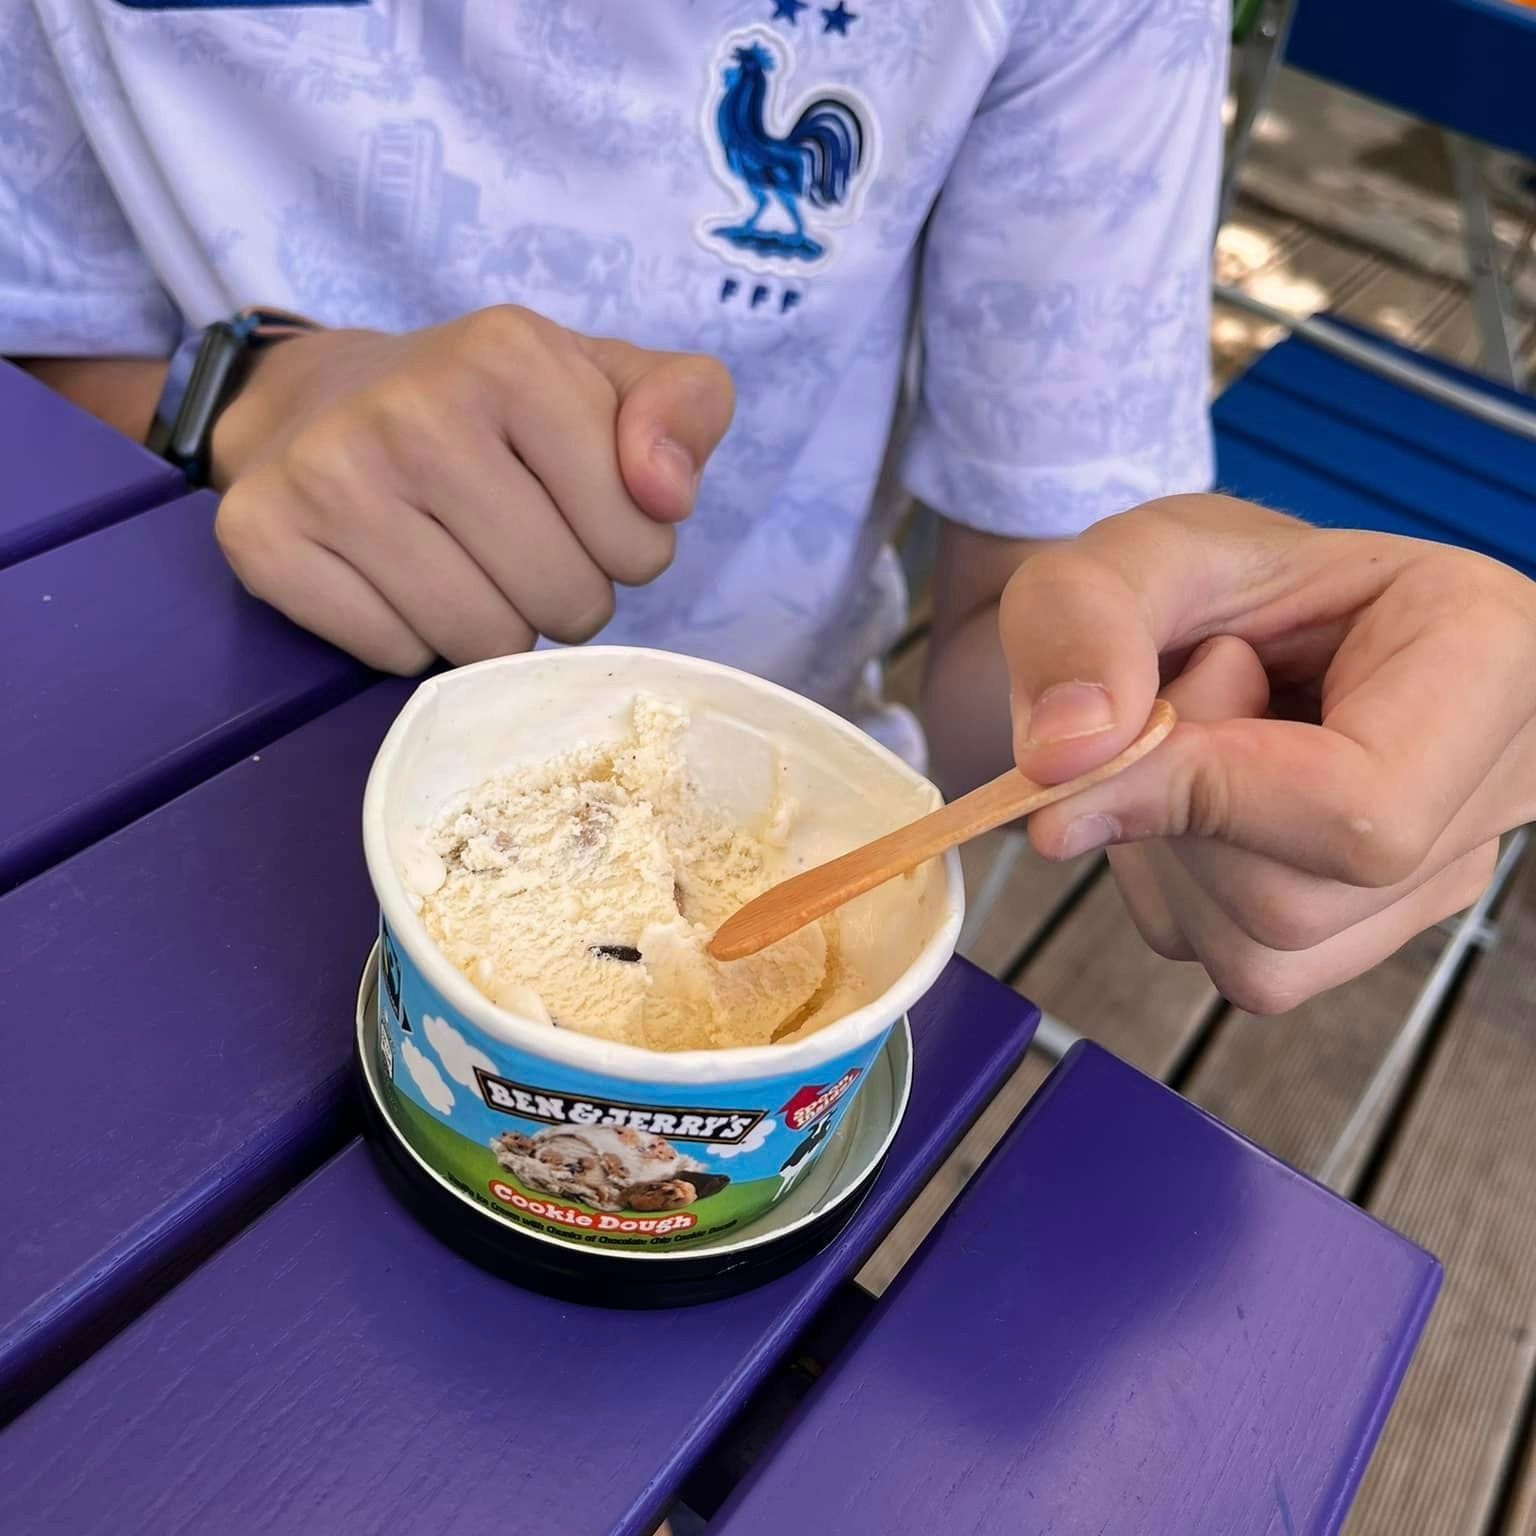 ice cream spoon.jpg